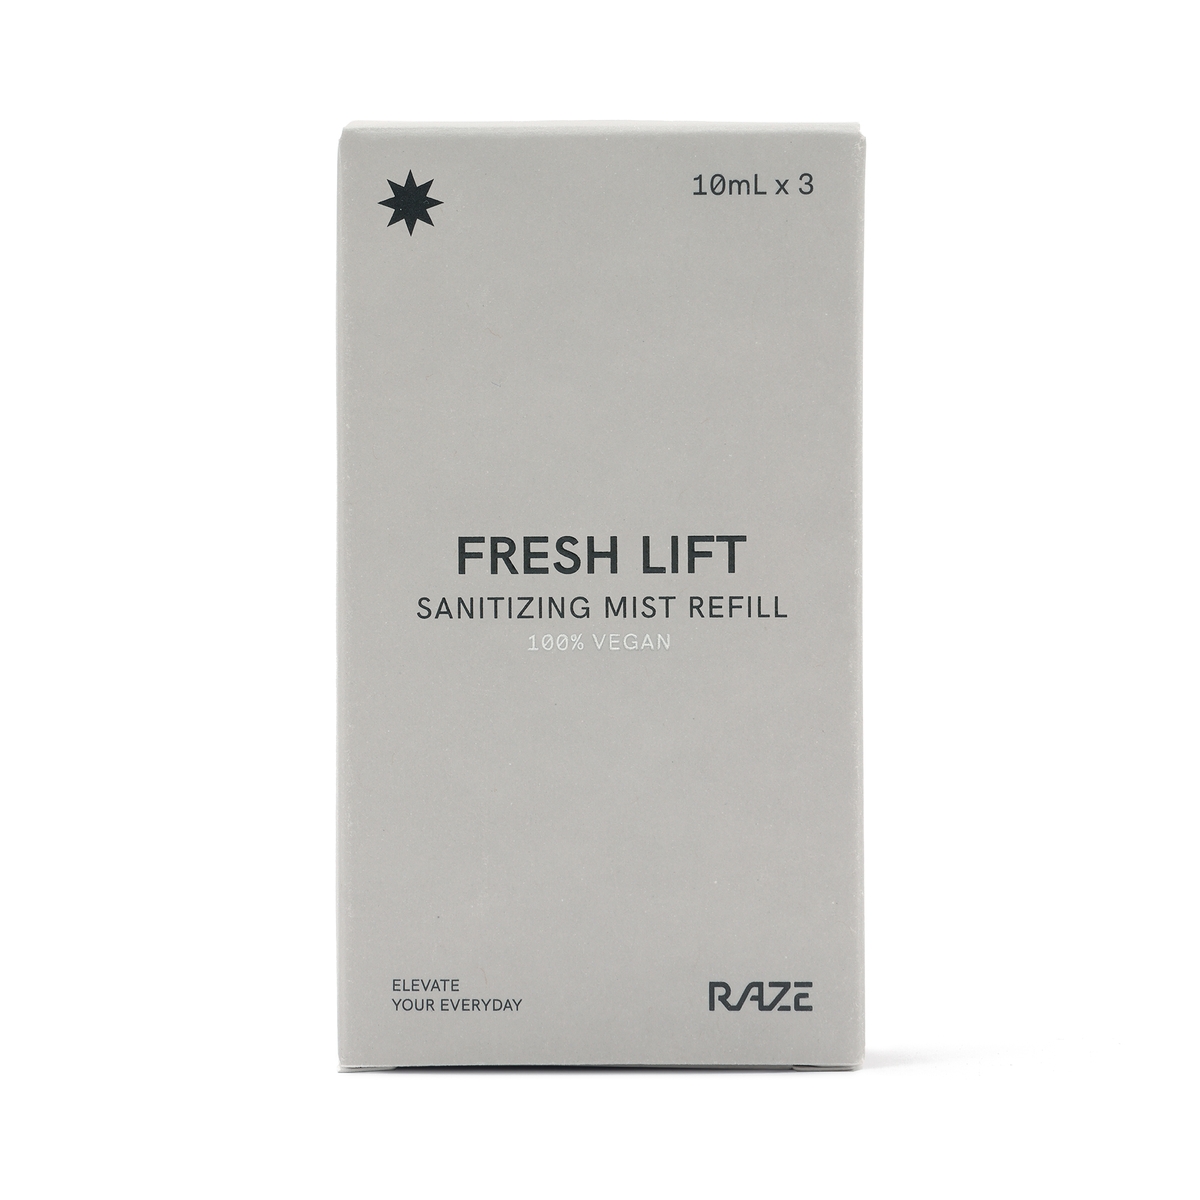 Fresh Lift Sanitizing Mist Refill 10mLx3